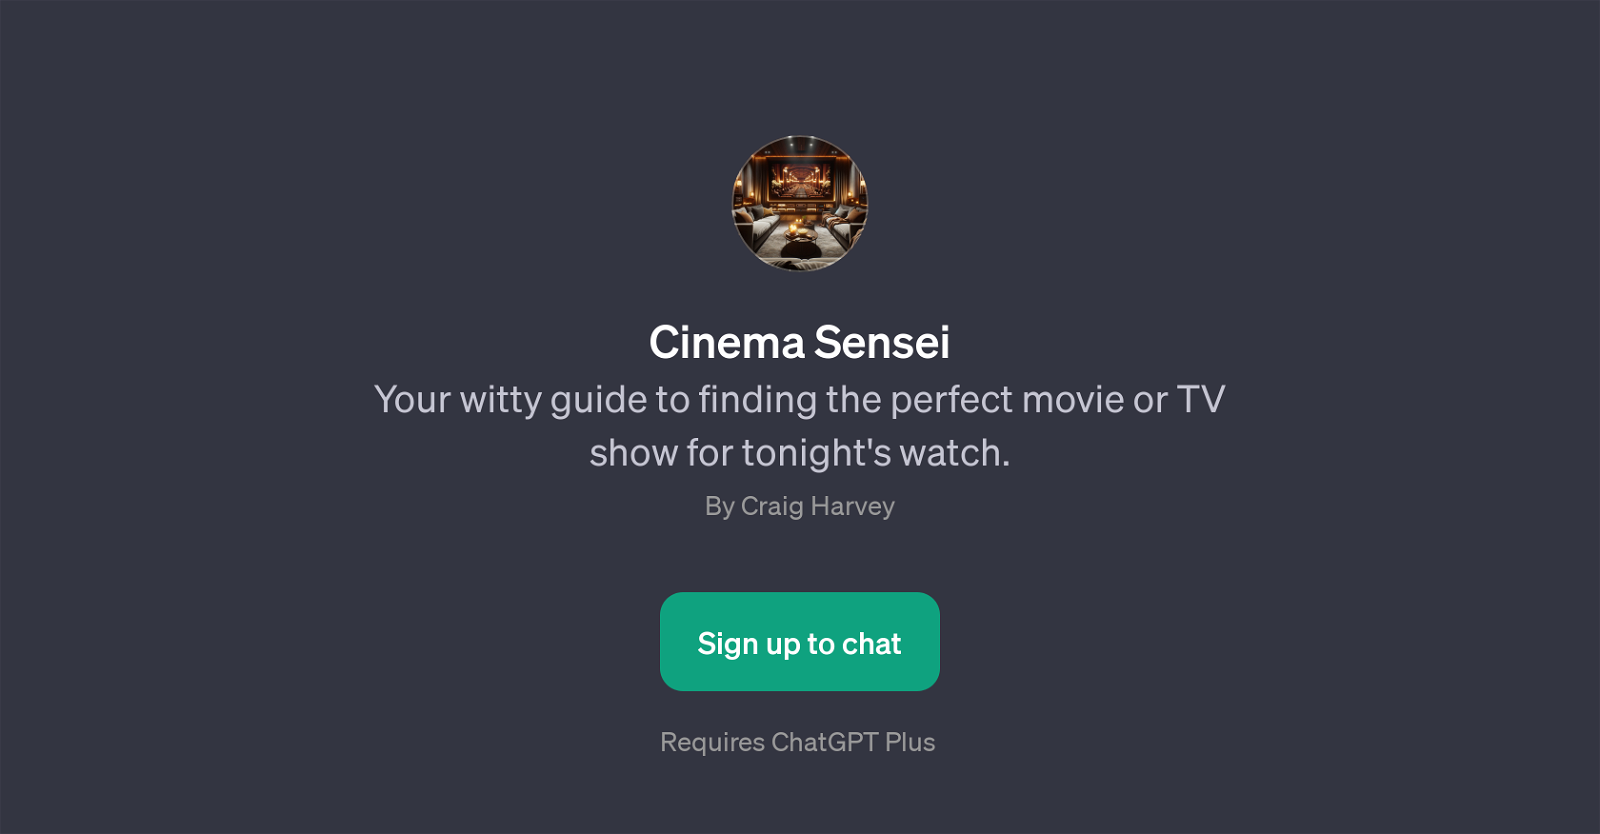 Cinema Sensei website